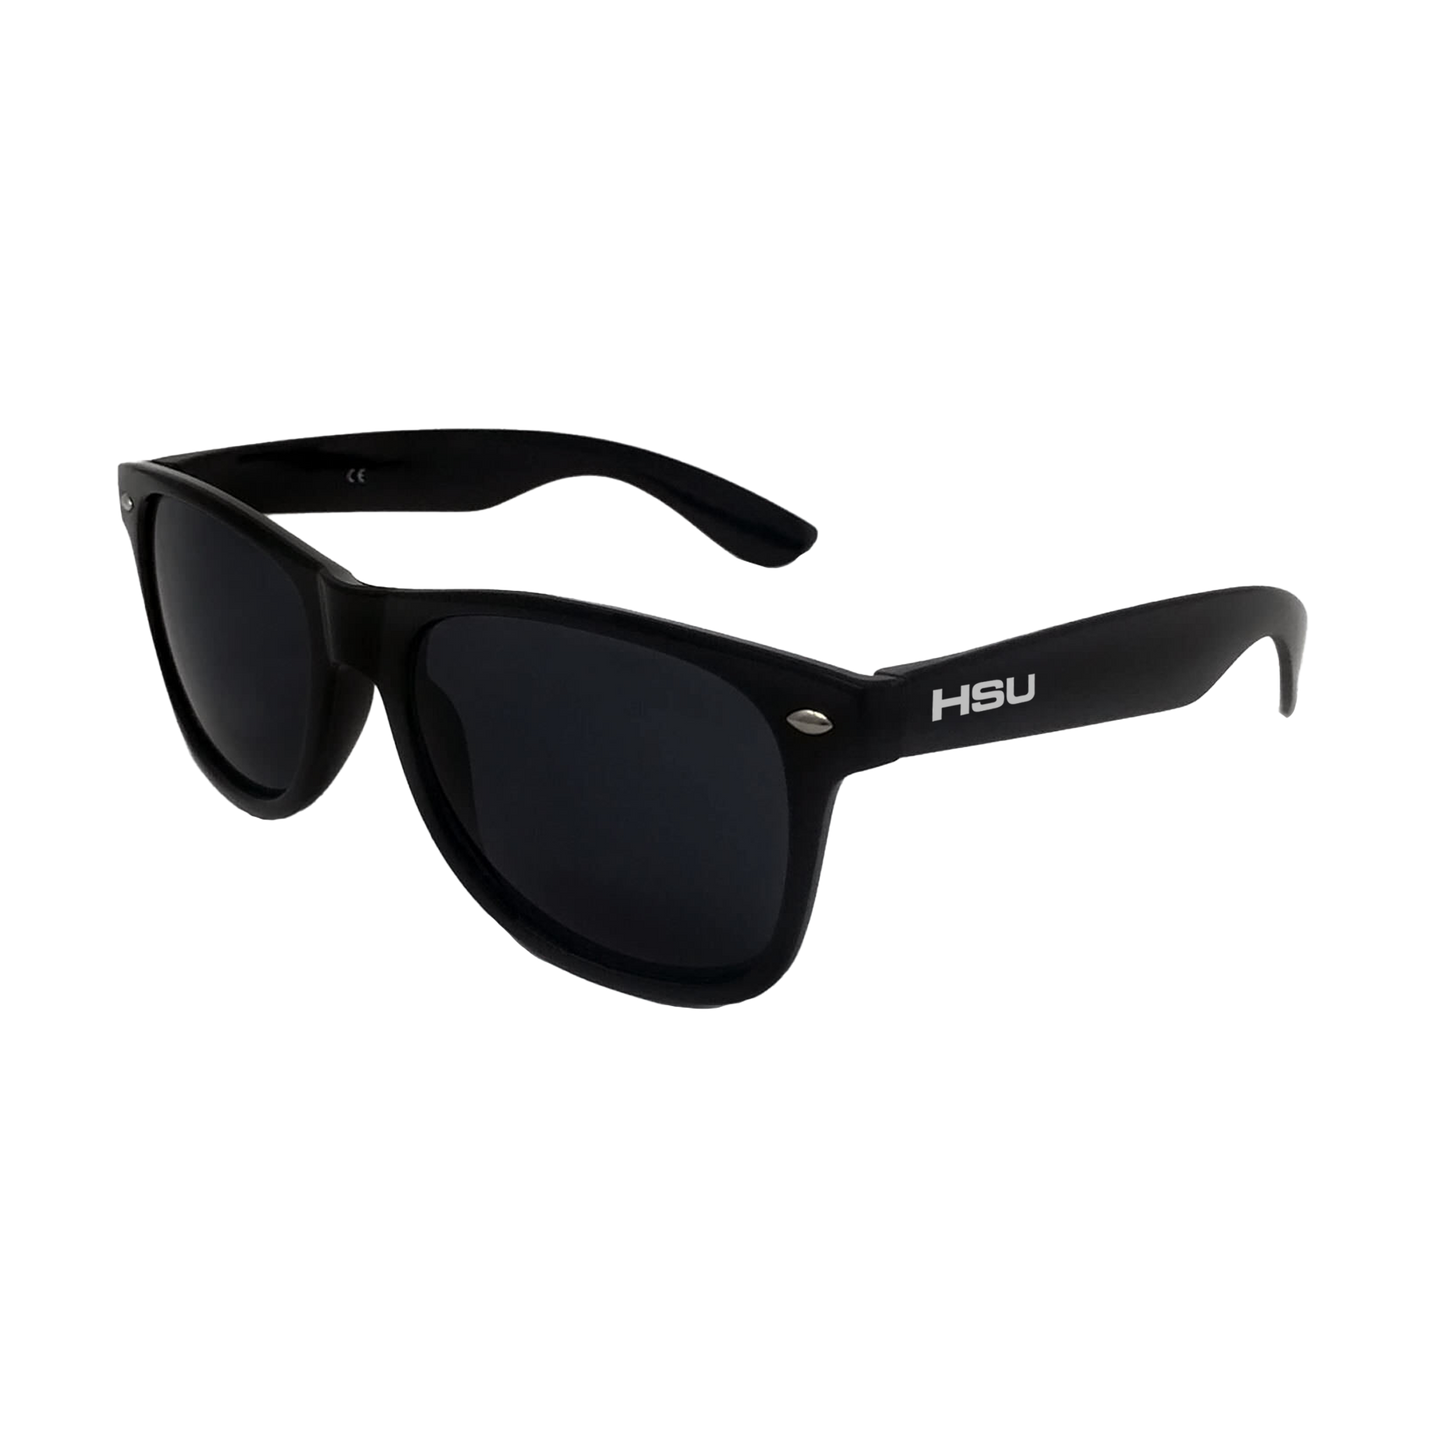 HSU Sunglasses x Blue Lense